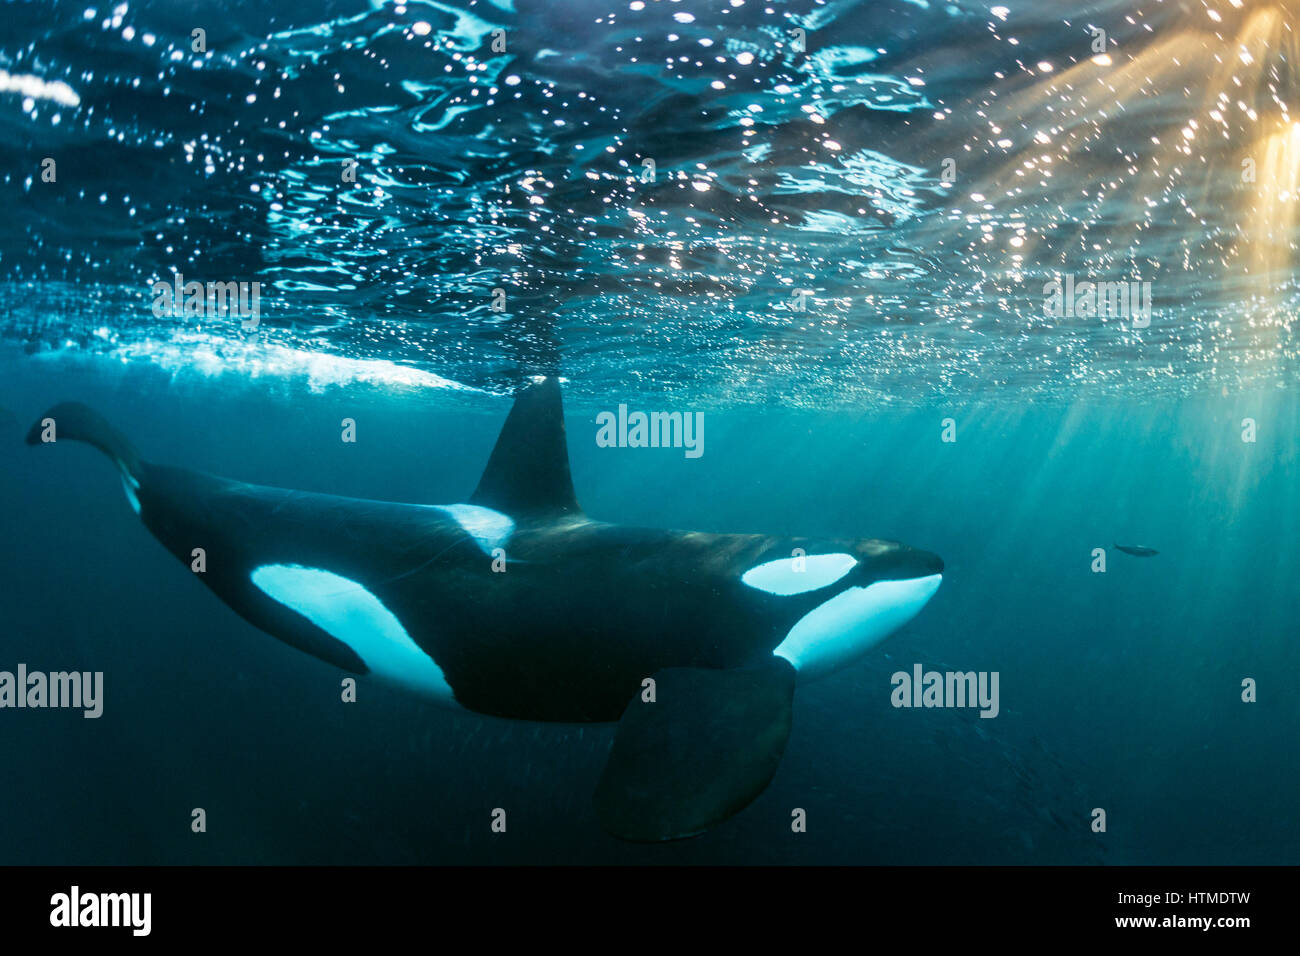 Orca (Orcinus orca) below the water surface, Norway, Tromvik, Kaldfjorden Stock Photo